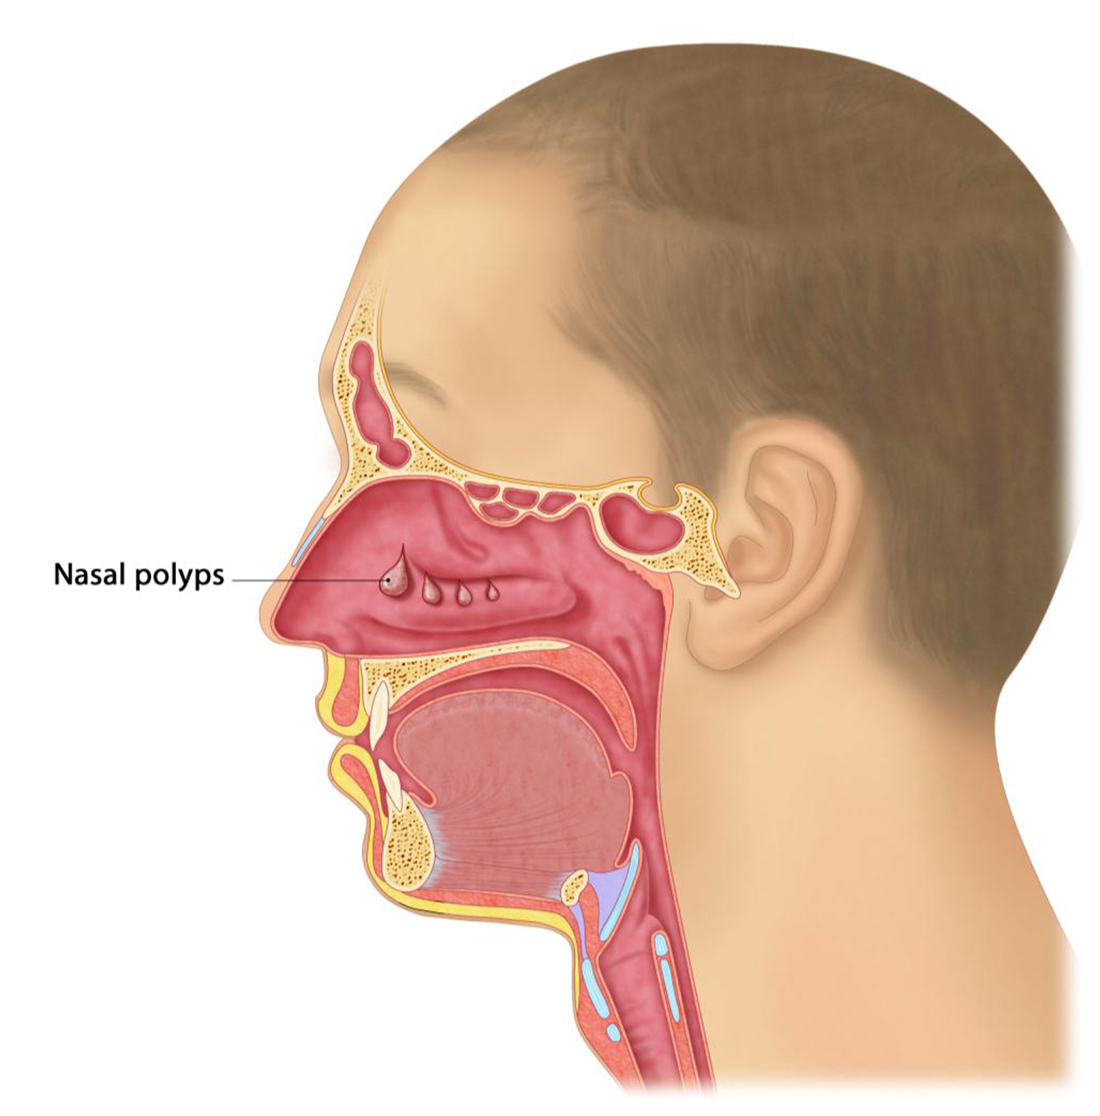 constant nasal congestion